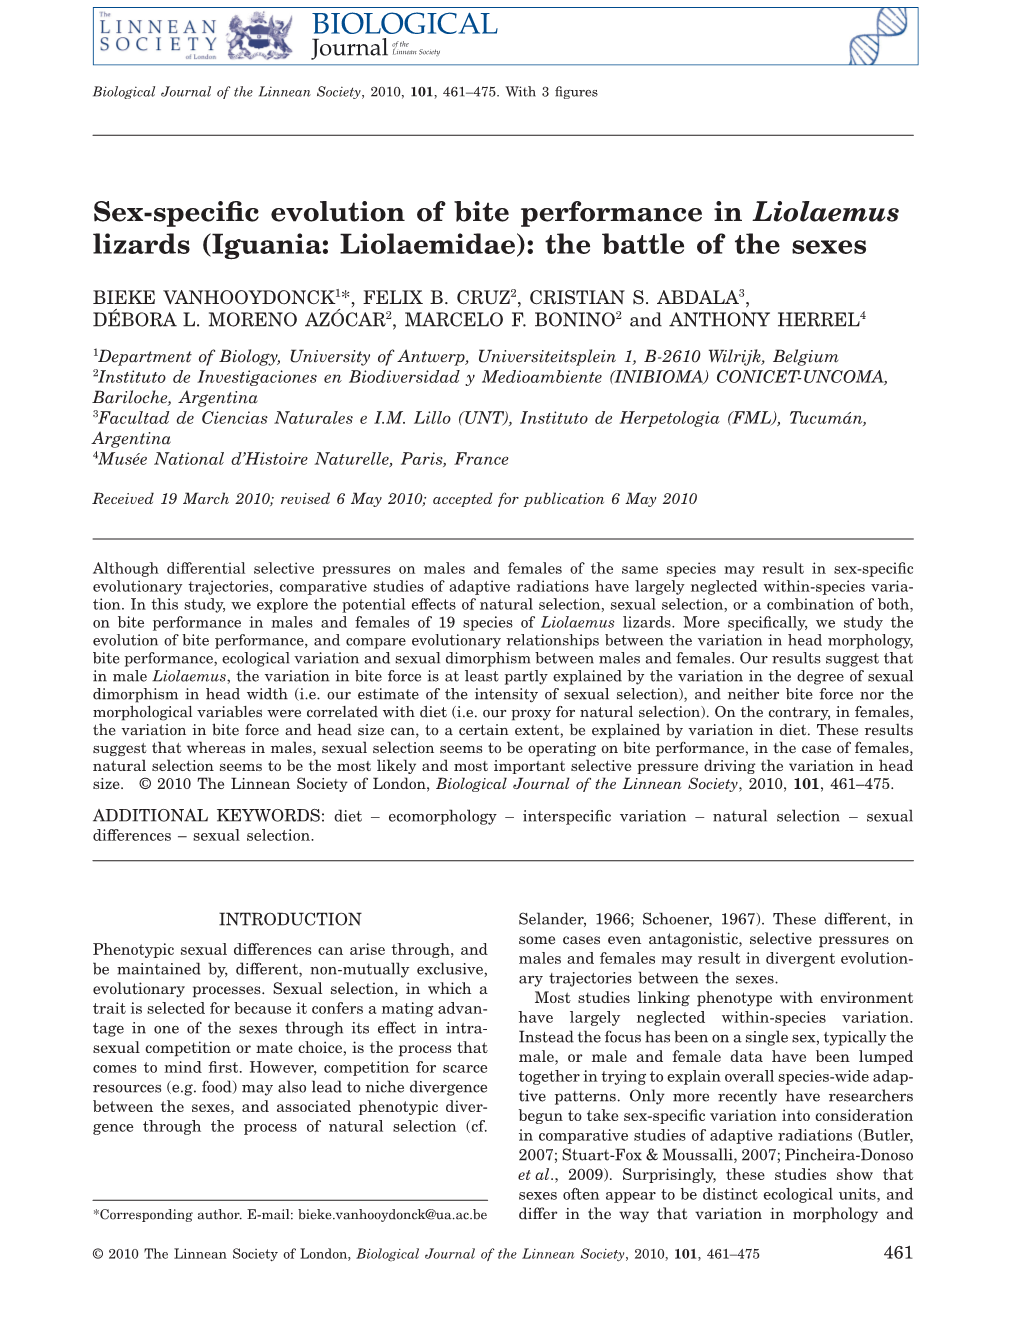 Sex-Specific Evolution of Bite Performance in Liolaemus Lizards